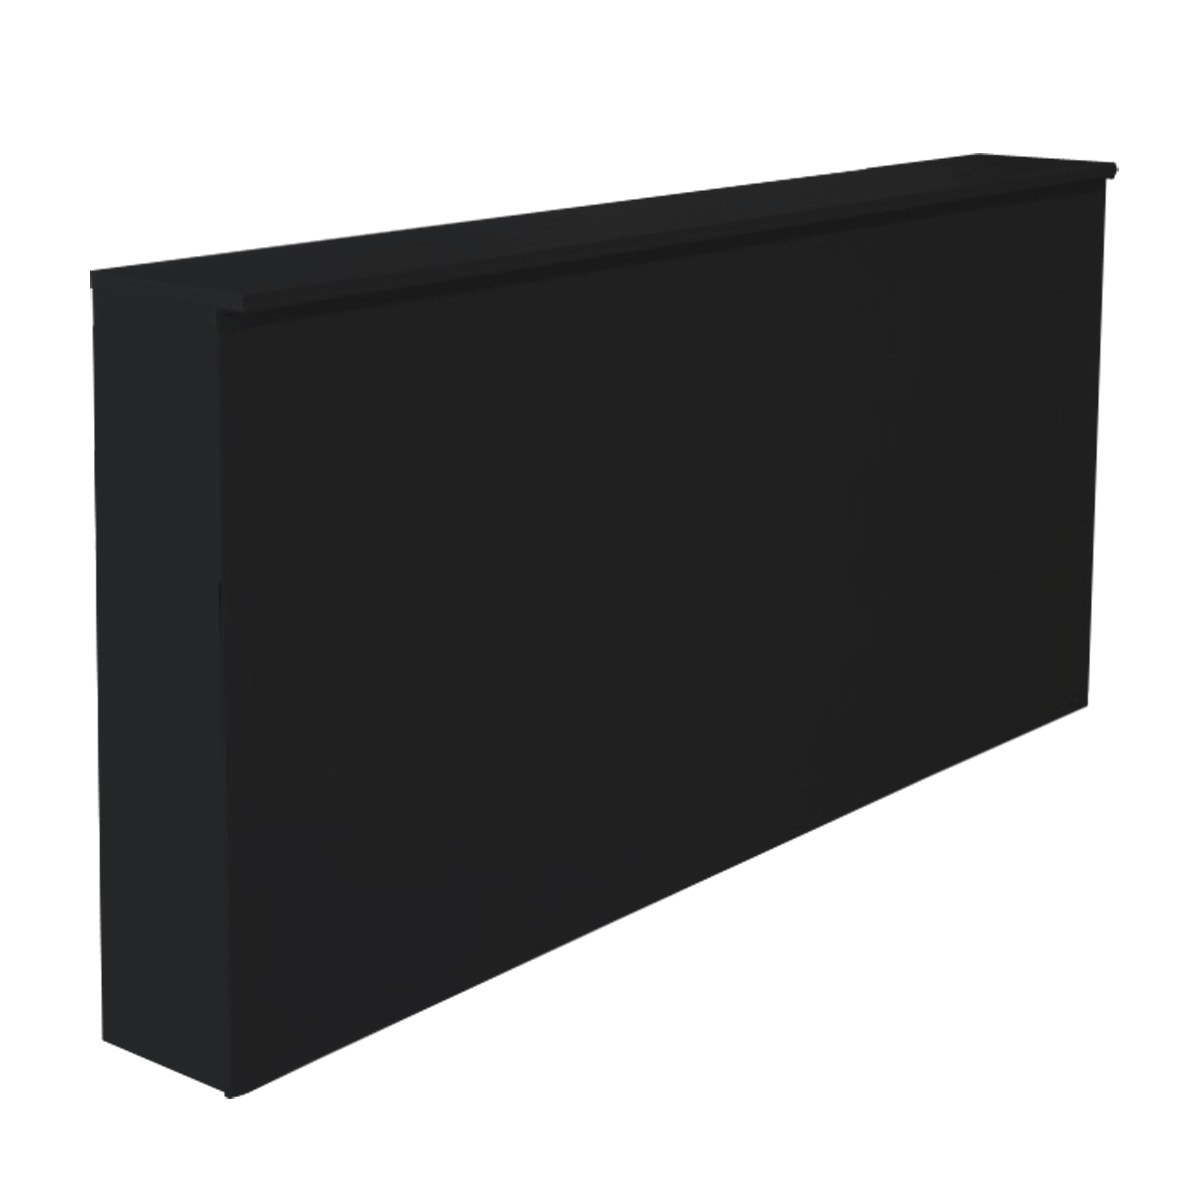 Receptionsdisk Business Multi 170×112,5 cm svart